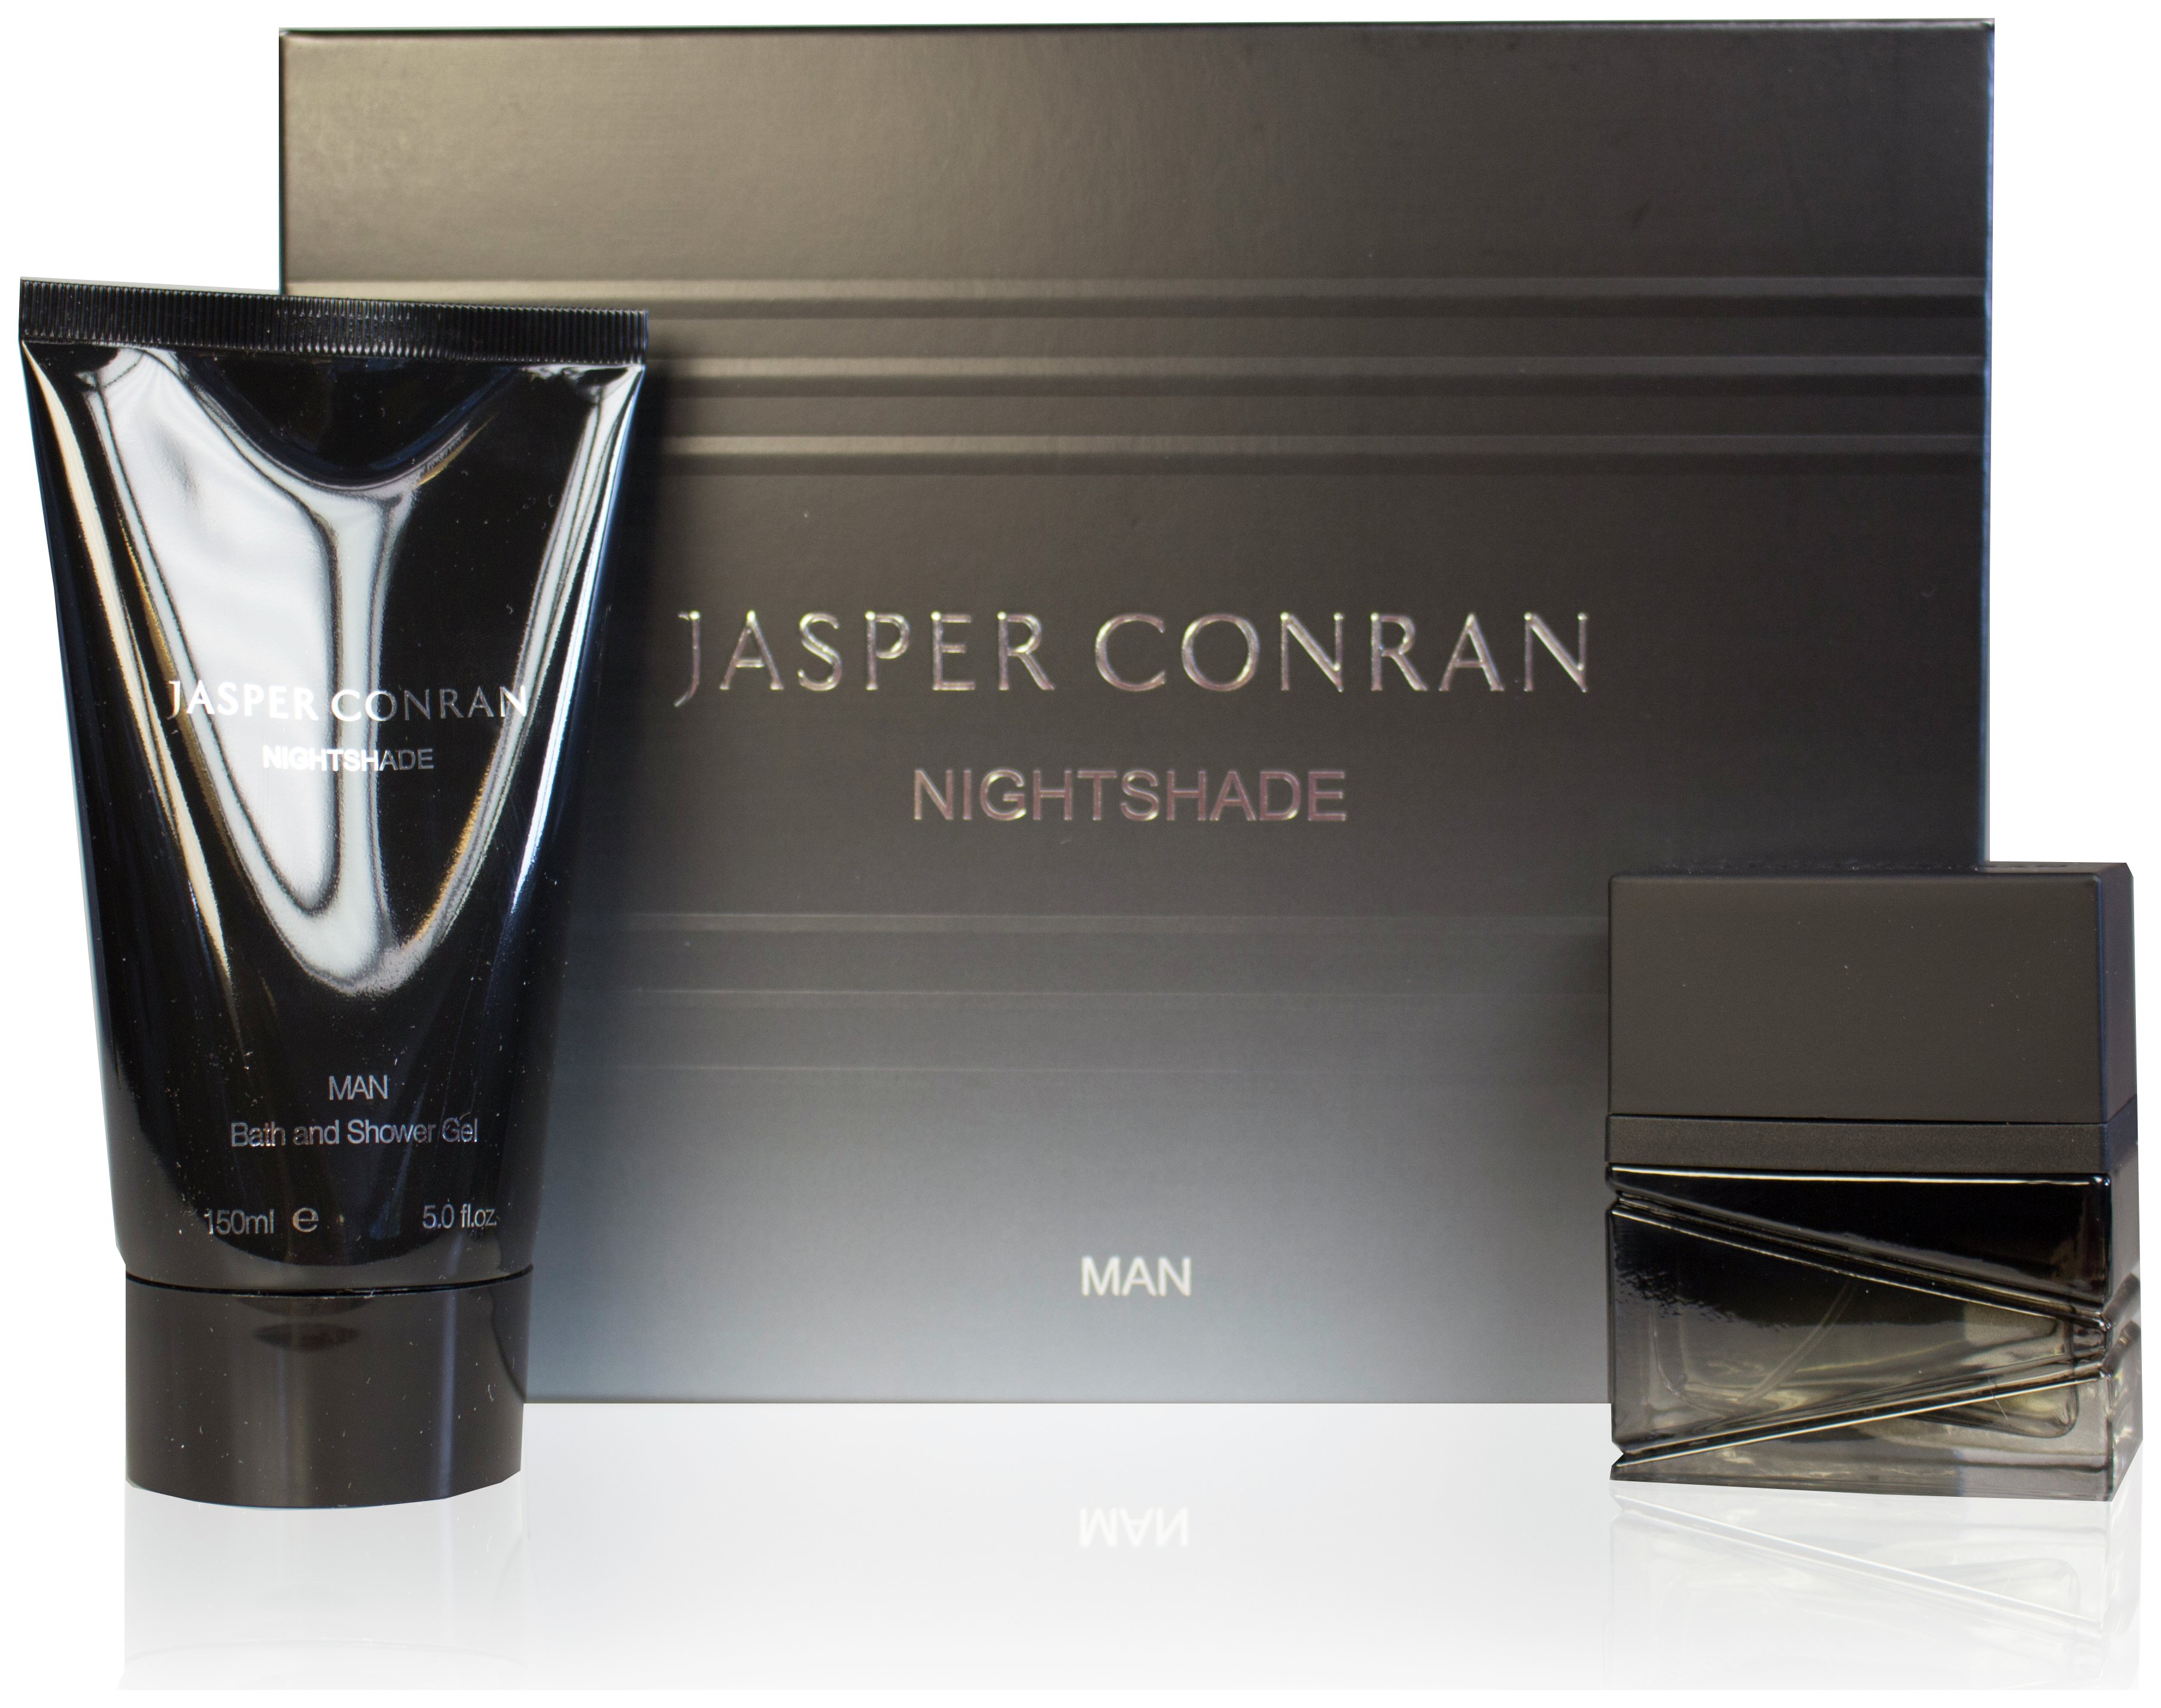 Jasper Conran Nightshade Men Eau de Toilette Gift Set - 40ml